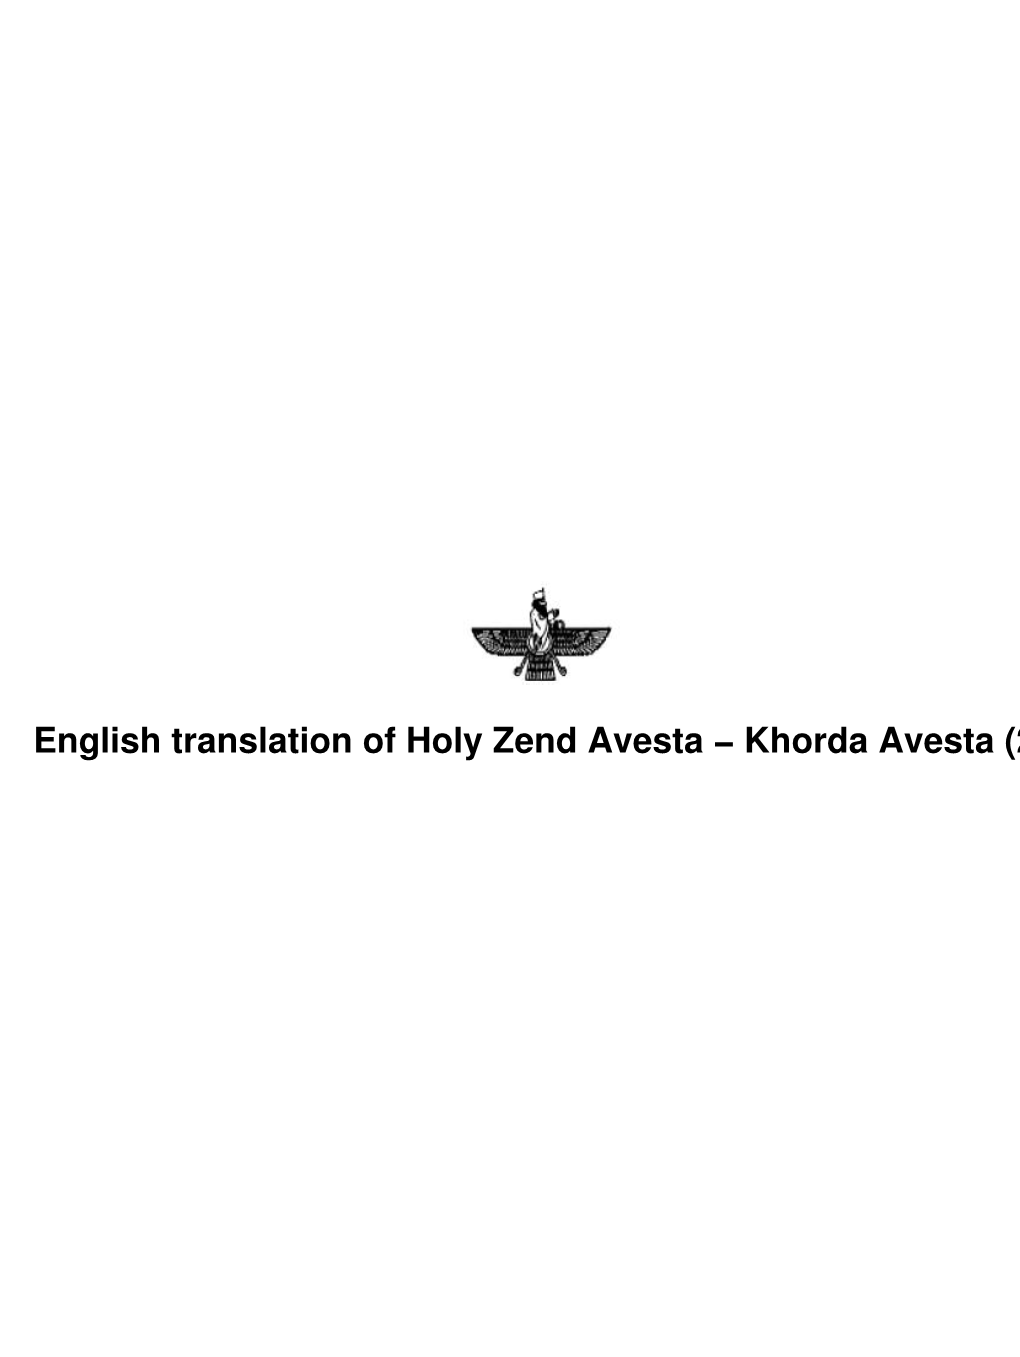 English Translation of Holy Zend Avesta − Khorda Avesta (2) English Translation of Holy Zend Avesta − Khorda Avesta (2) Table of Contents Credits